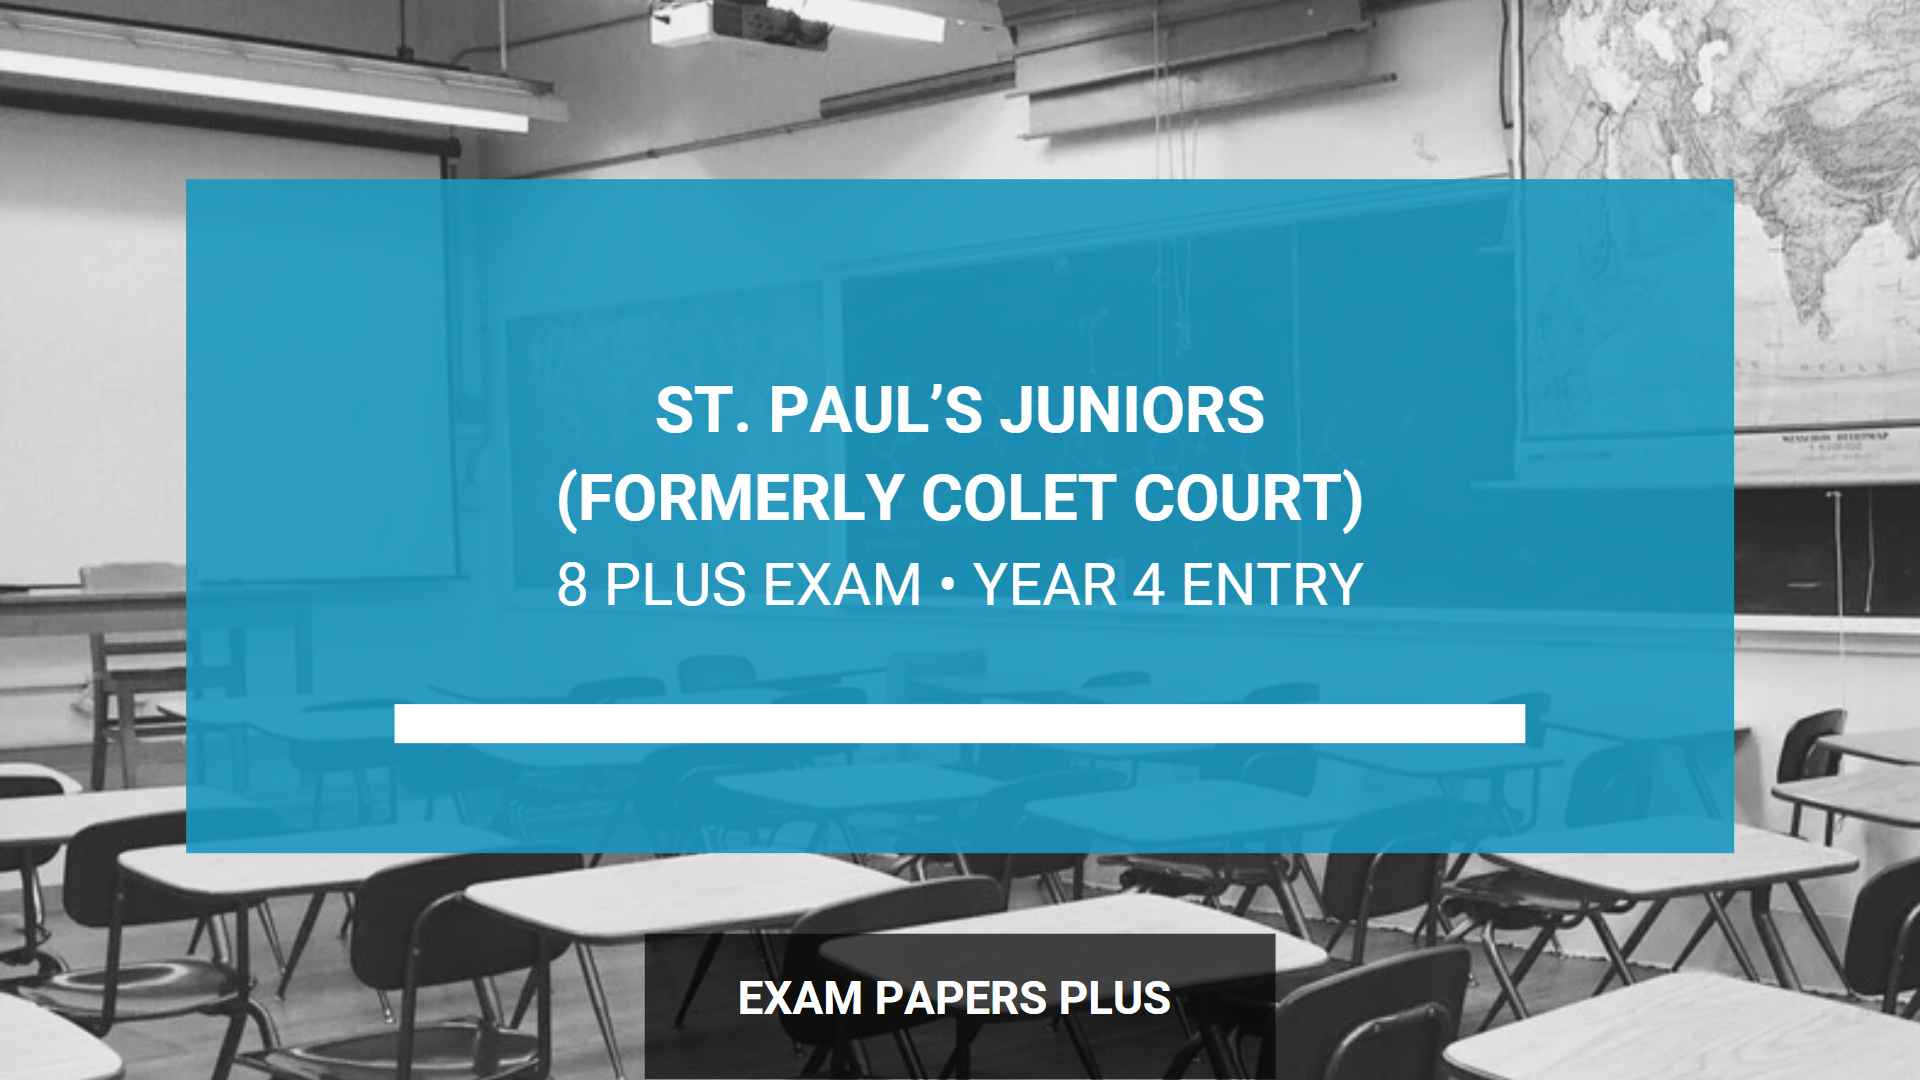 St. Paul's Juniors (SPJ) 8+ (8 Plus) Exam For Year 4 Entry - Key Details